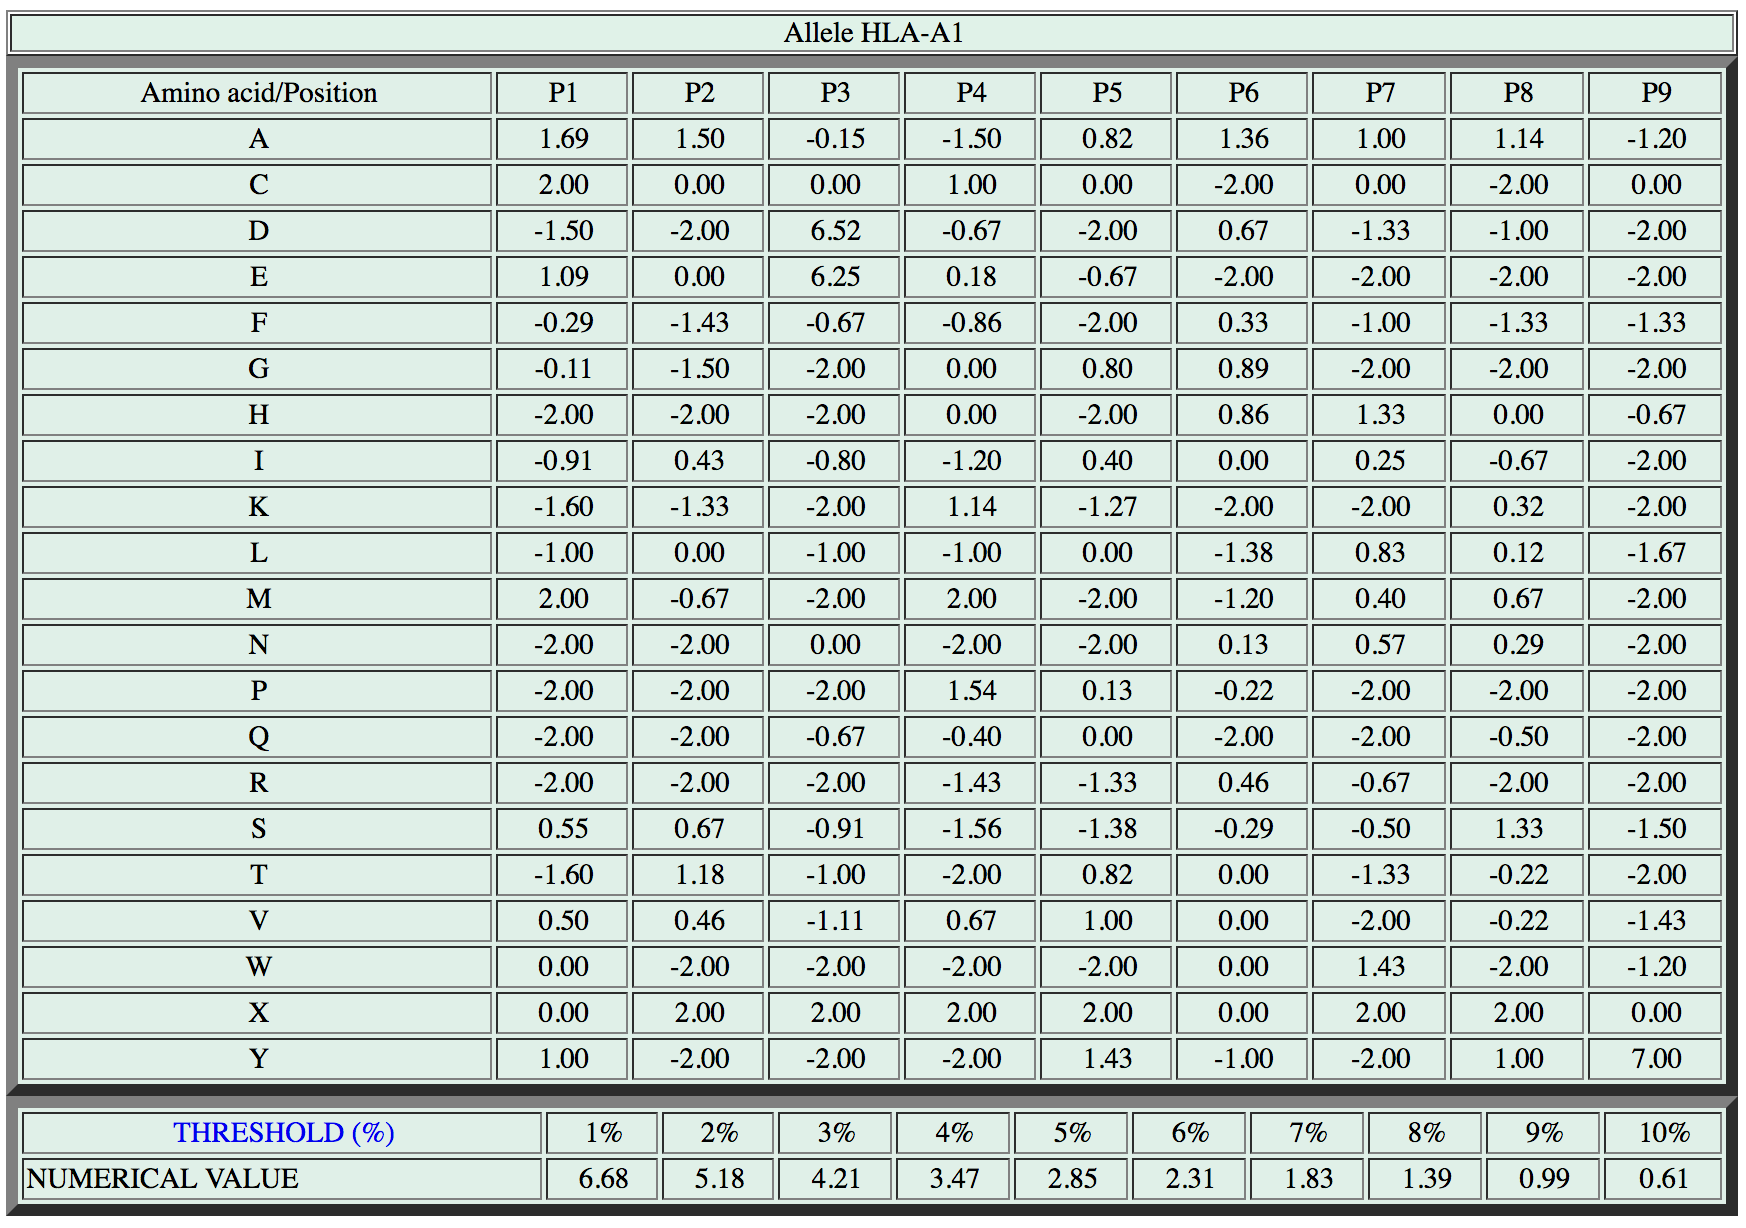 The scoring Matrix for MHC allele HLA-A1